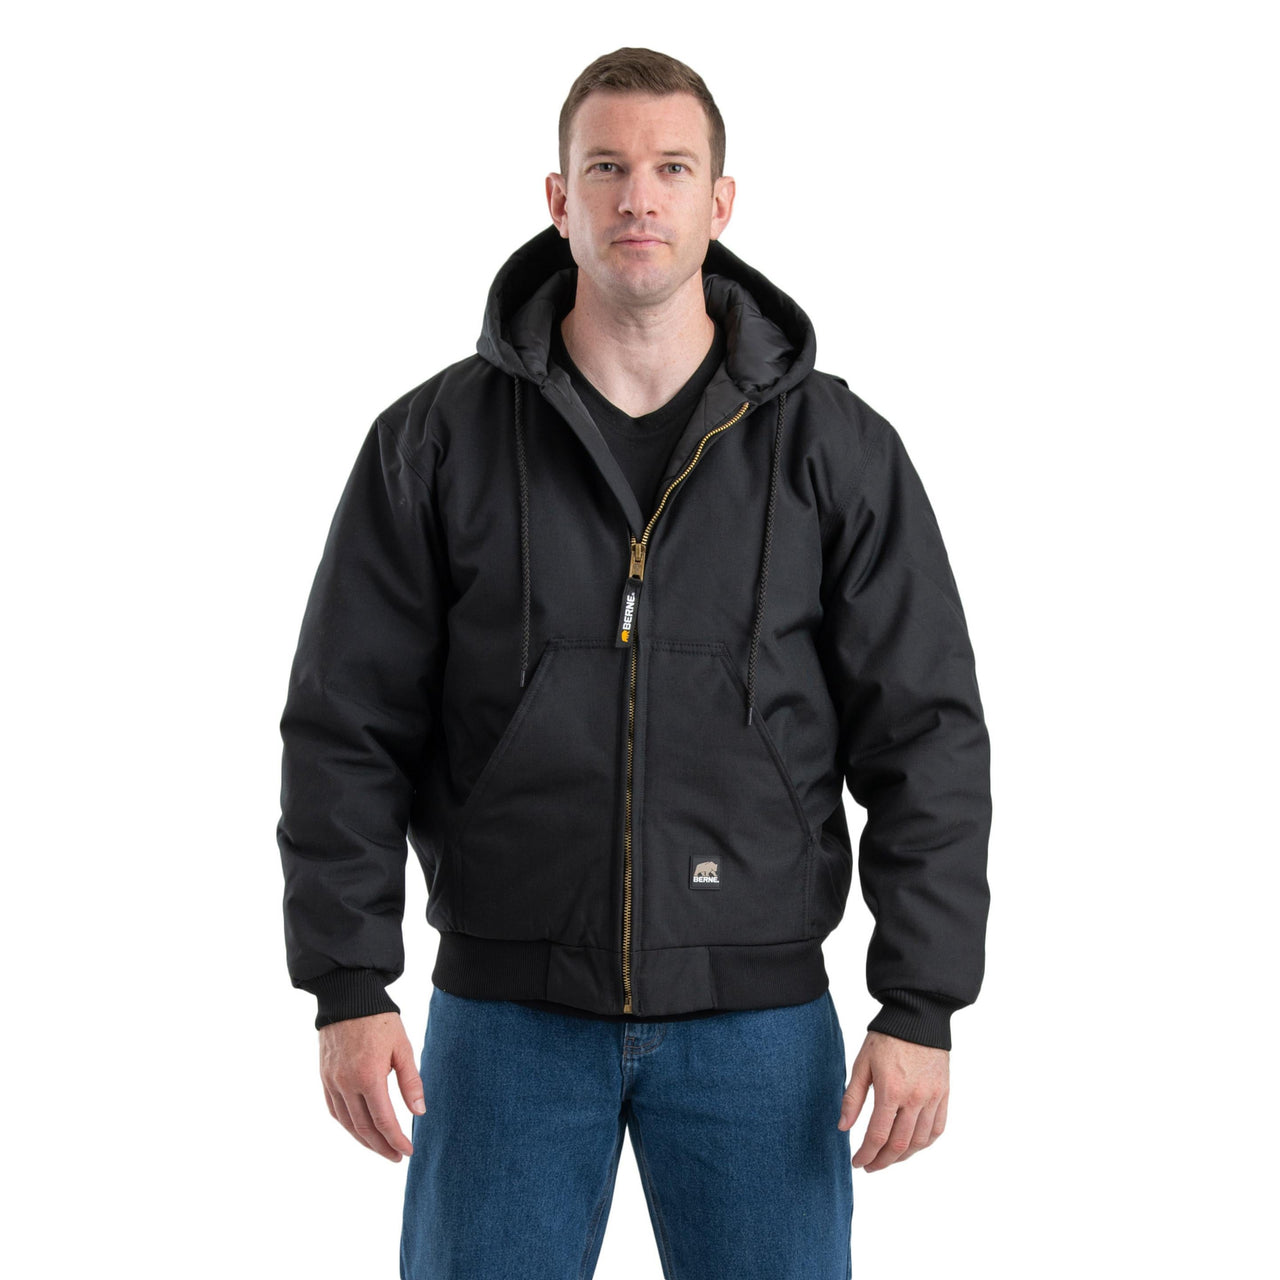 Berne Men's Icecap Insulated Hooded Jacket - Black